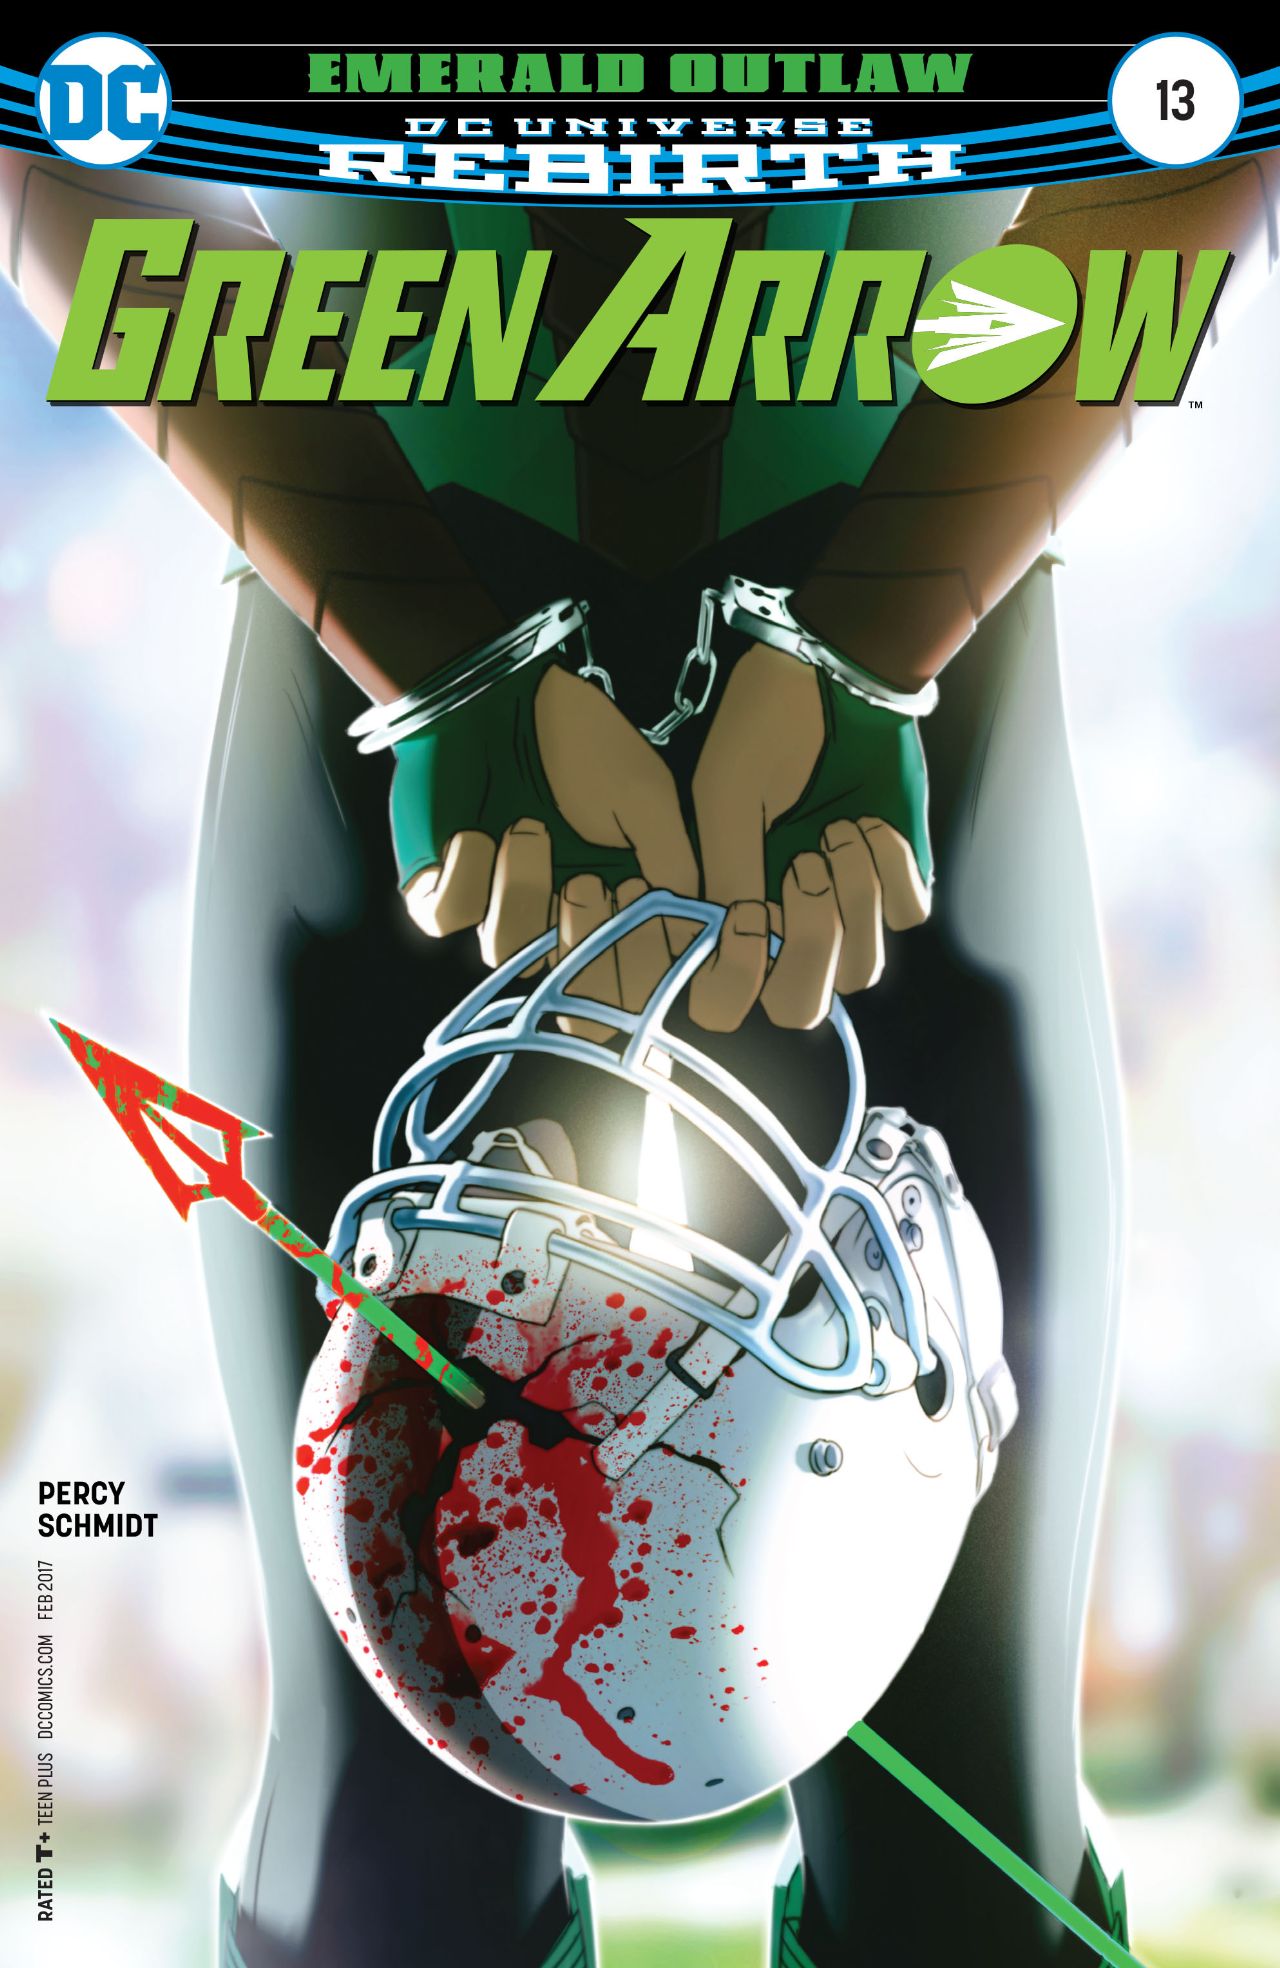 Green Arrow #13 Review